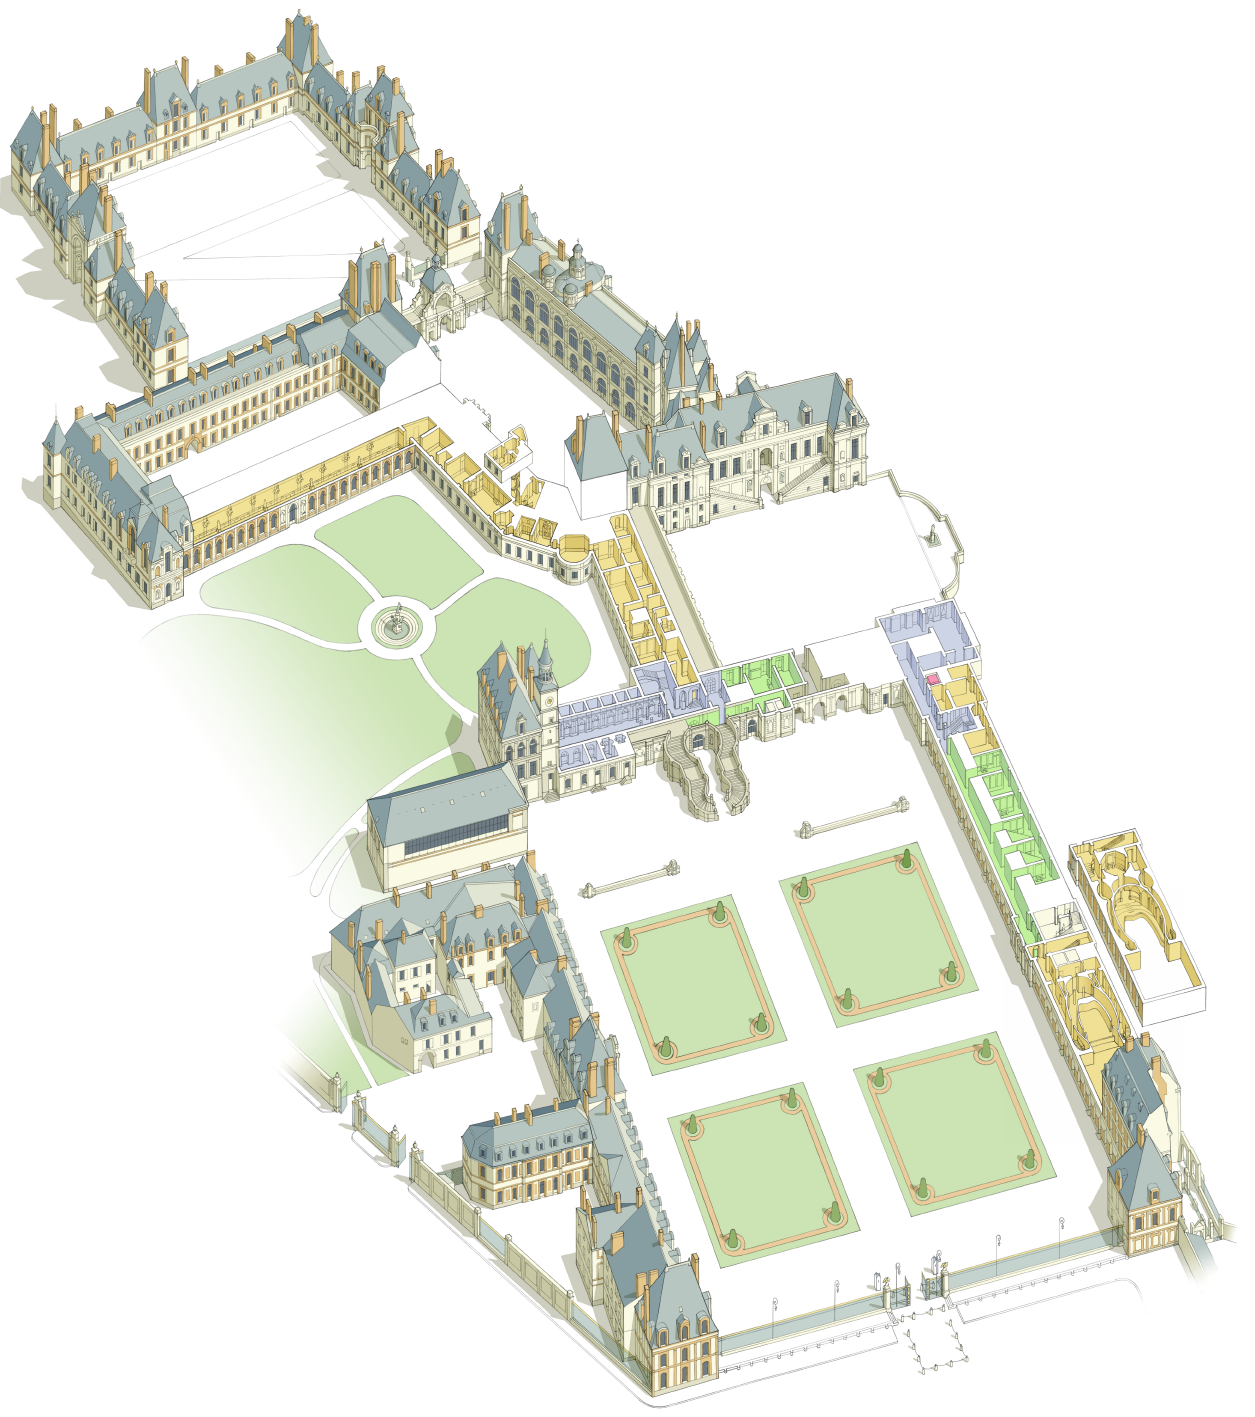 Fontainebleau Jardin France Plan Chateau  Fontainebleau, How to plan,  Château chambord